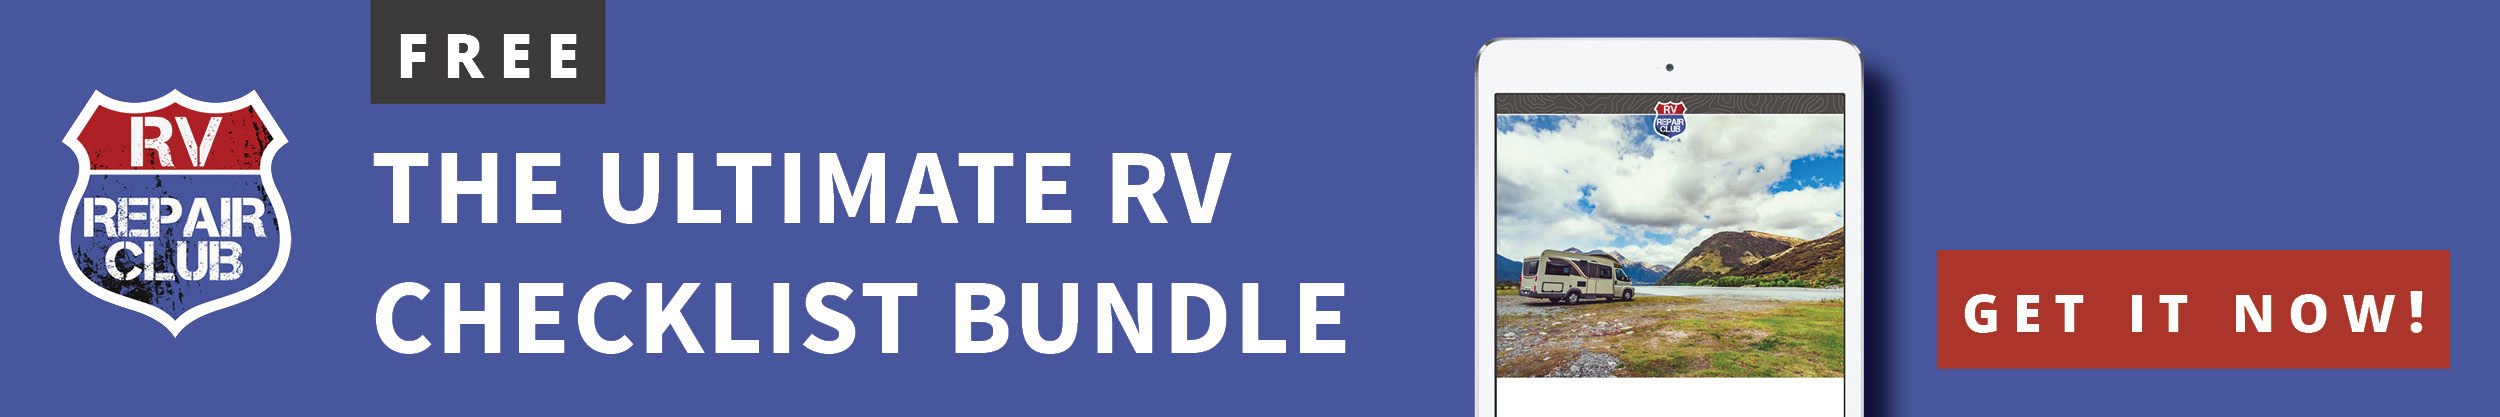 Ultimate RV Checklist Banner